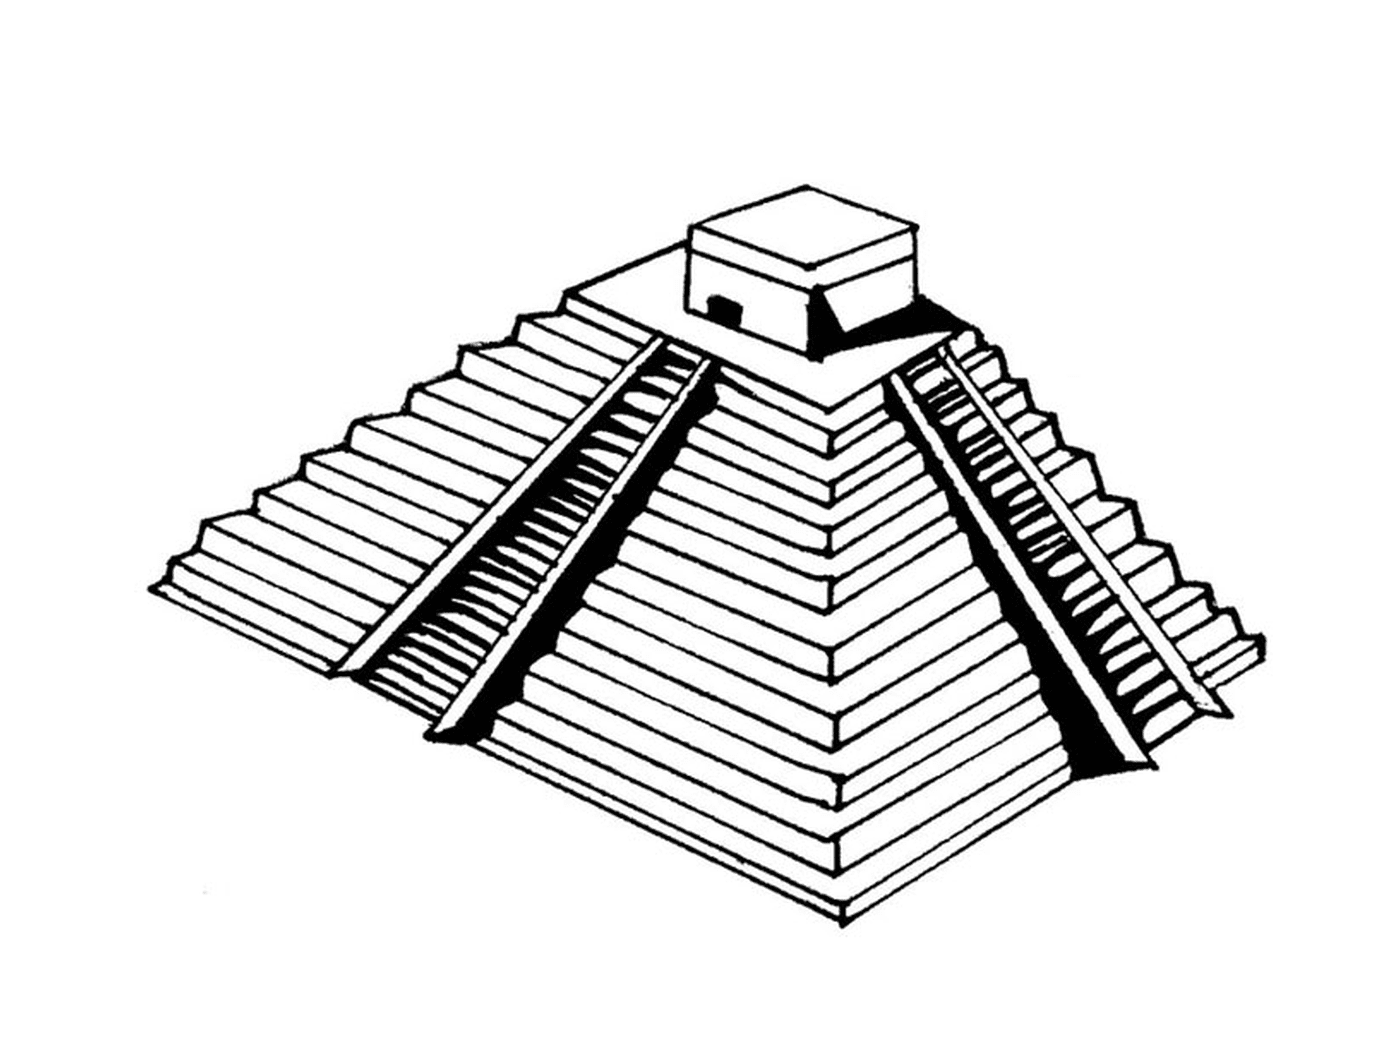  Pyramid with a platform 